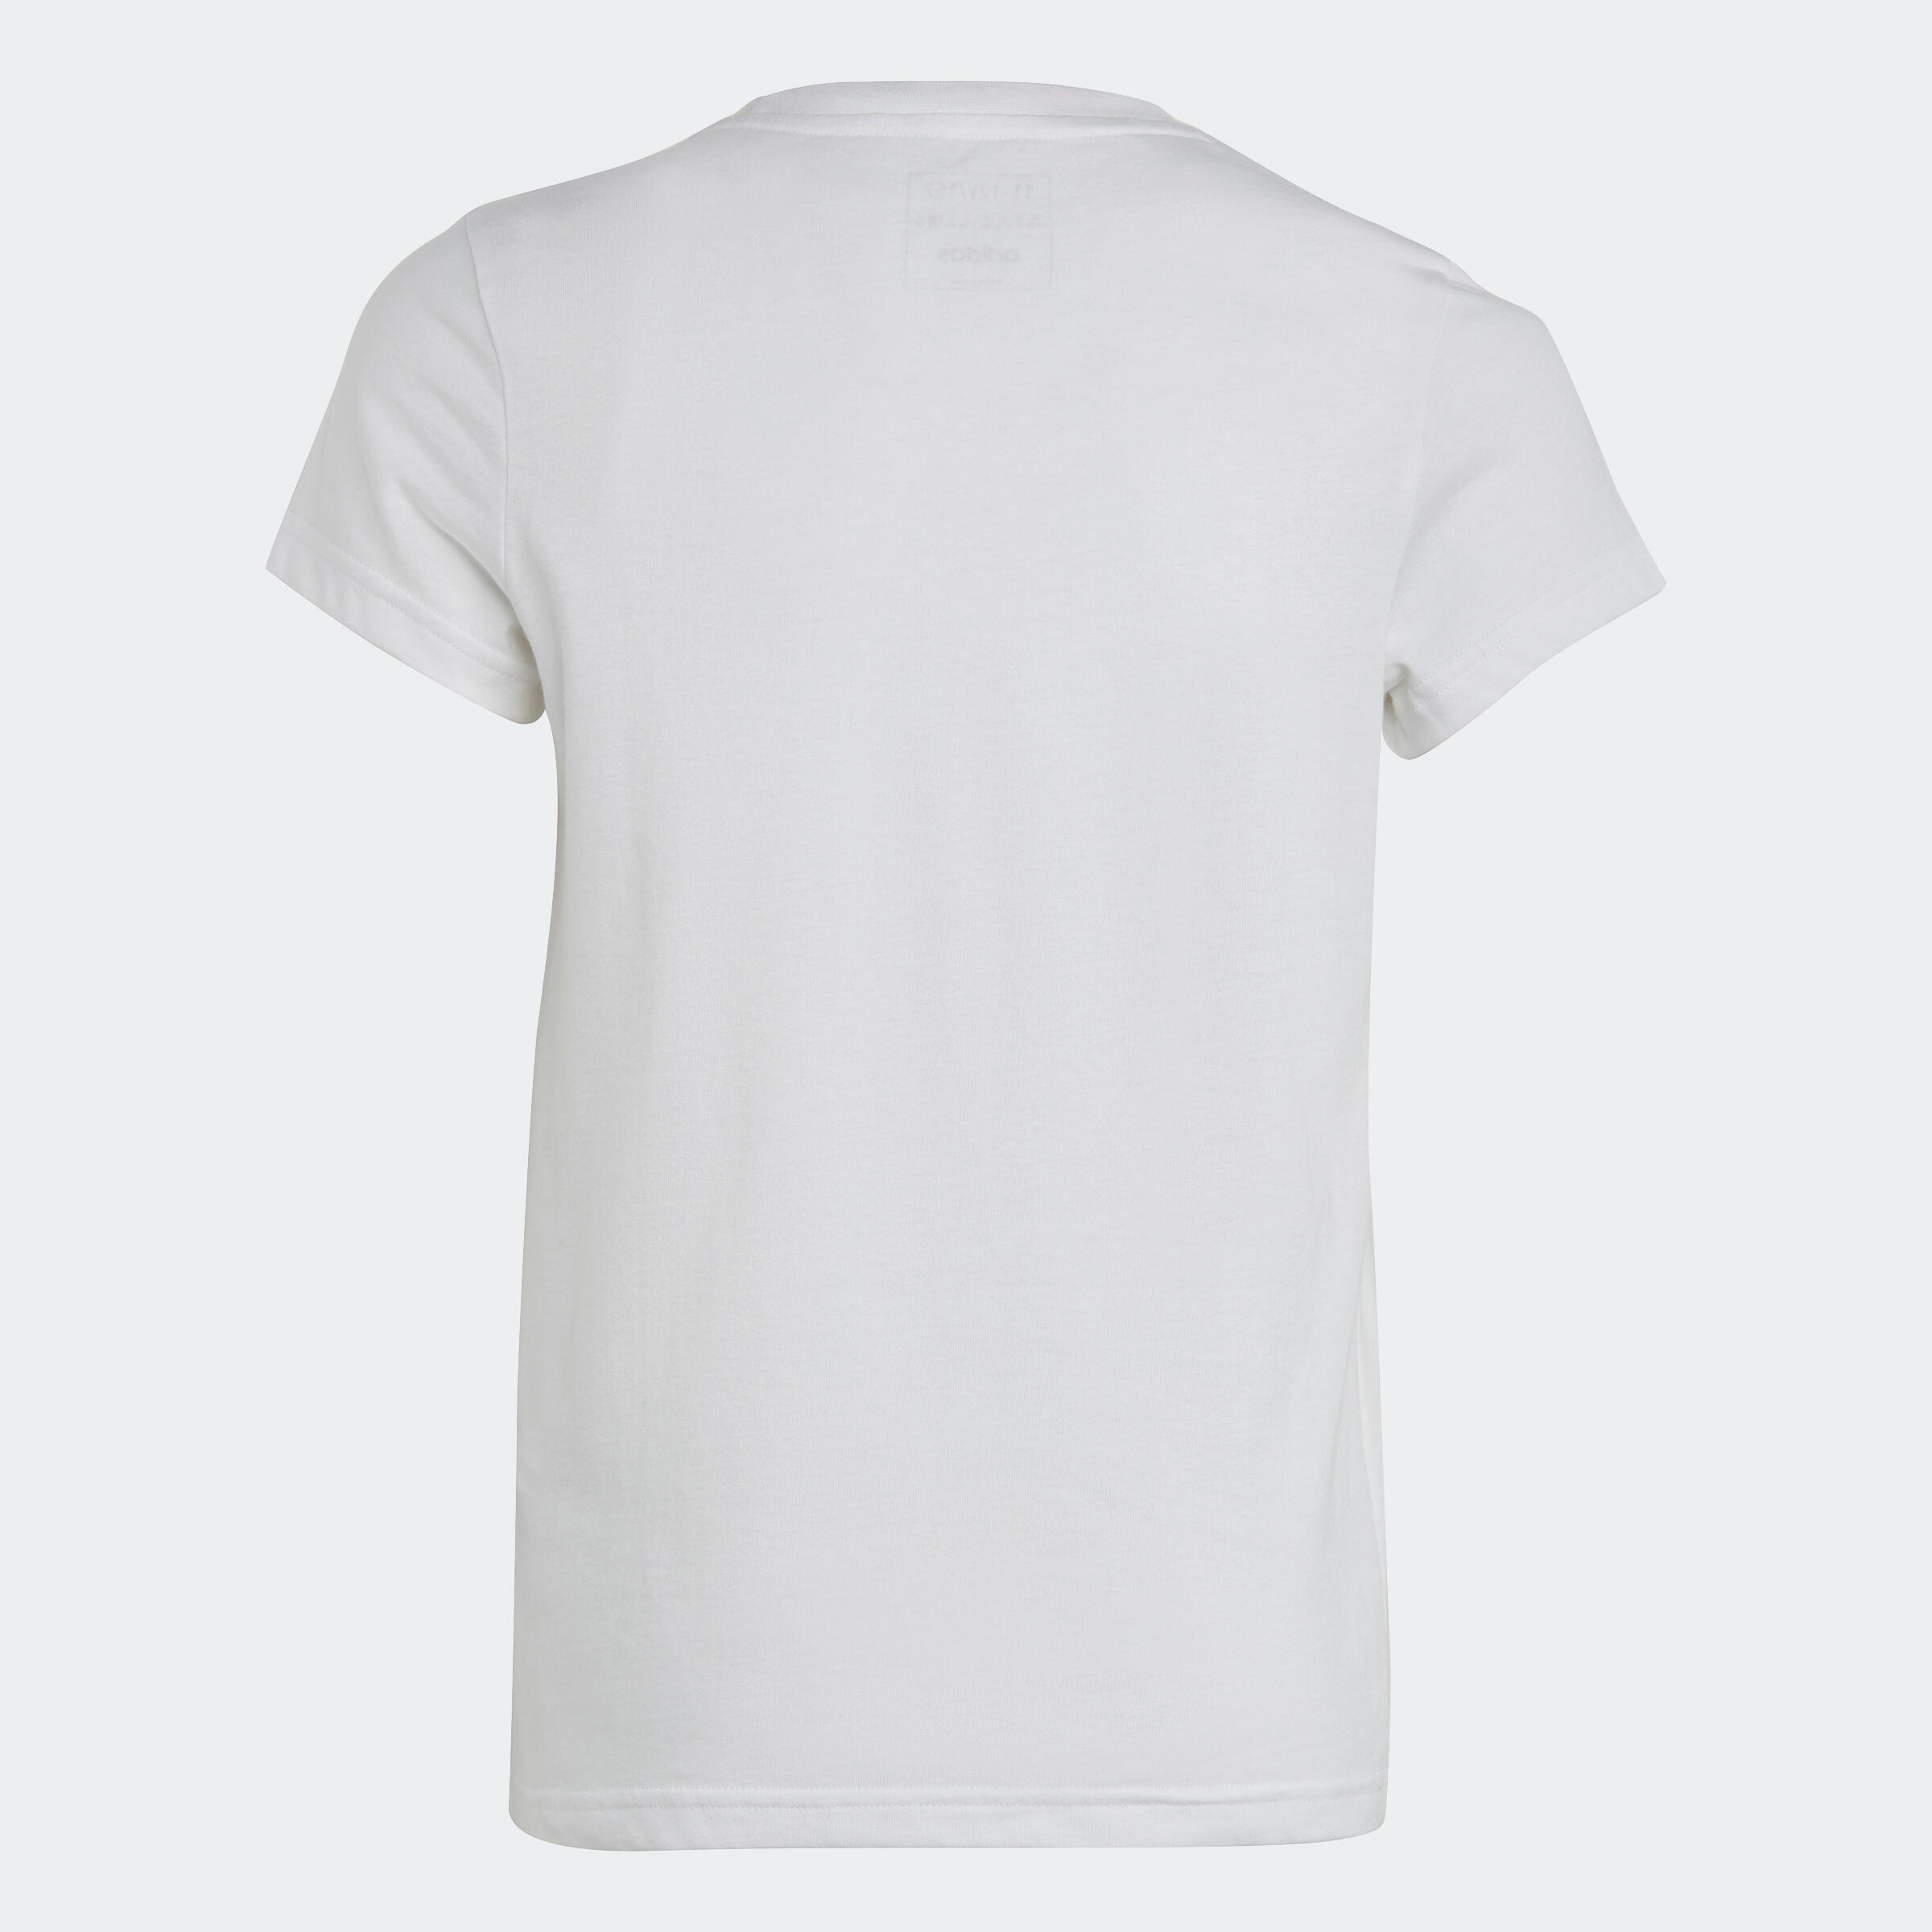 Girls' T-Shirt - White/Black Logo 2/5